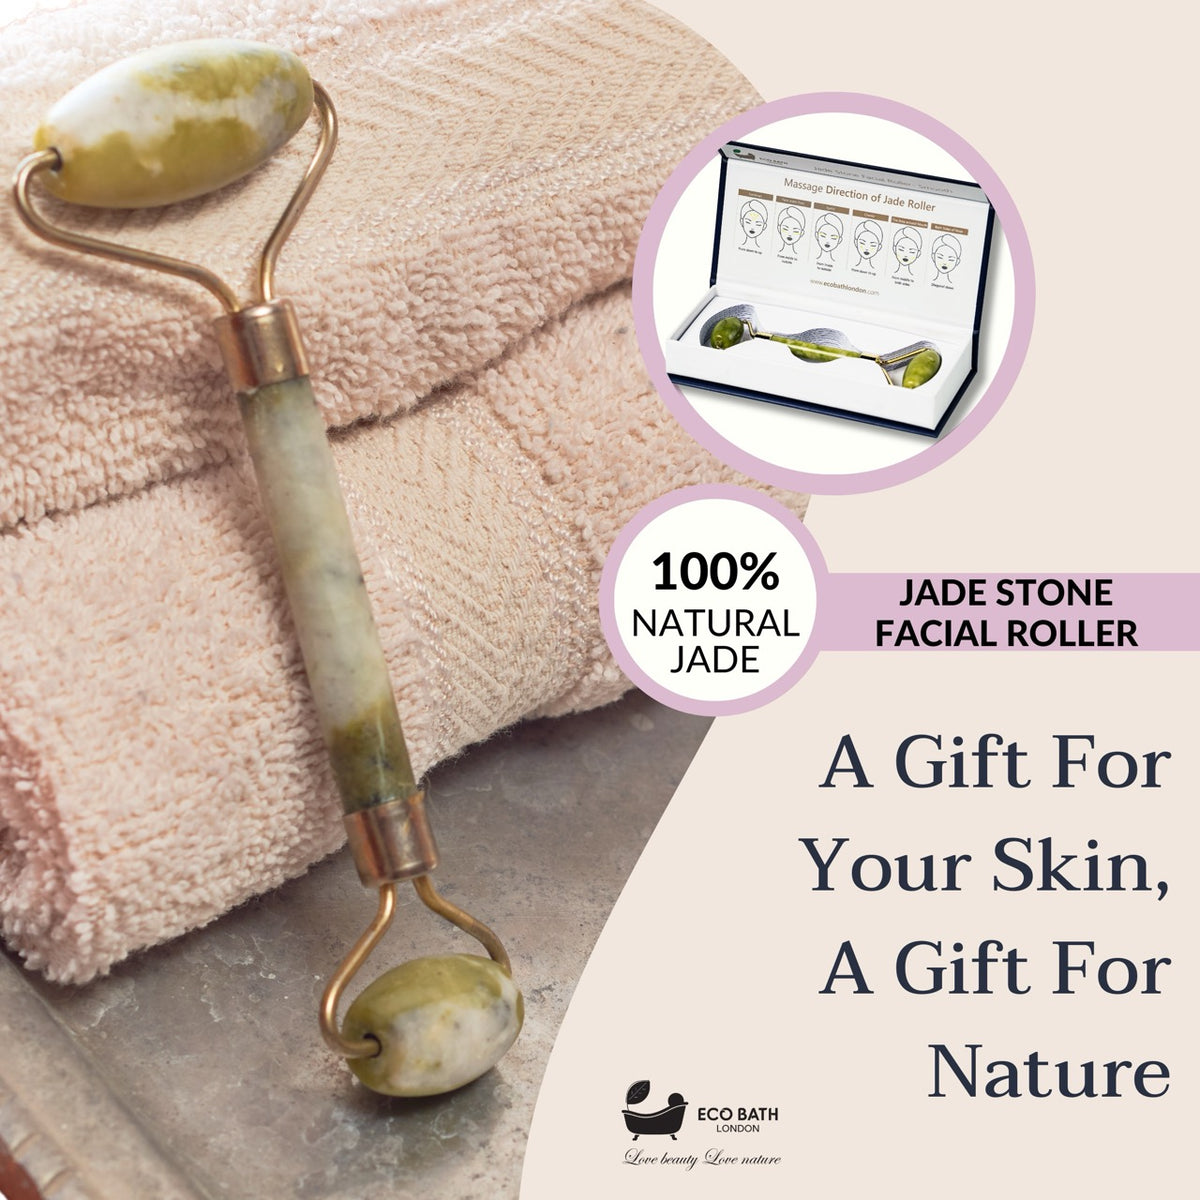 Eco Bath Jade Face Roller